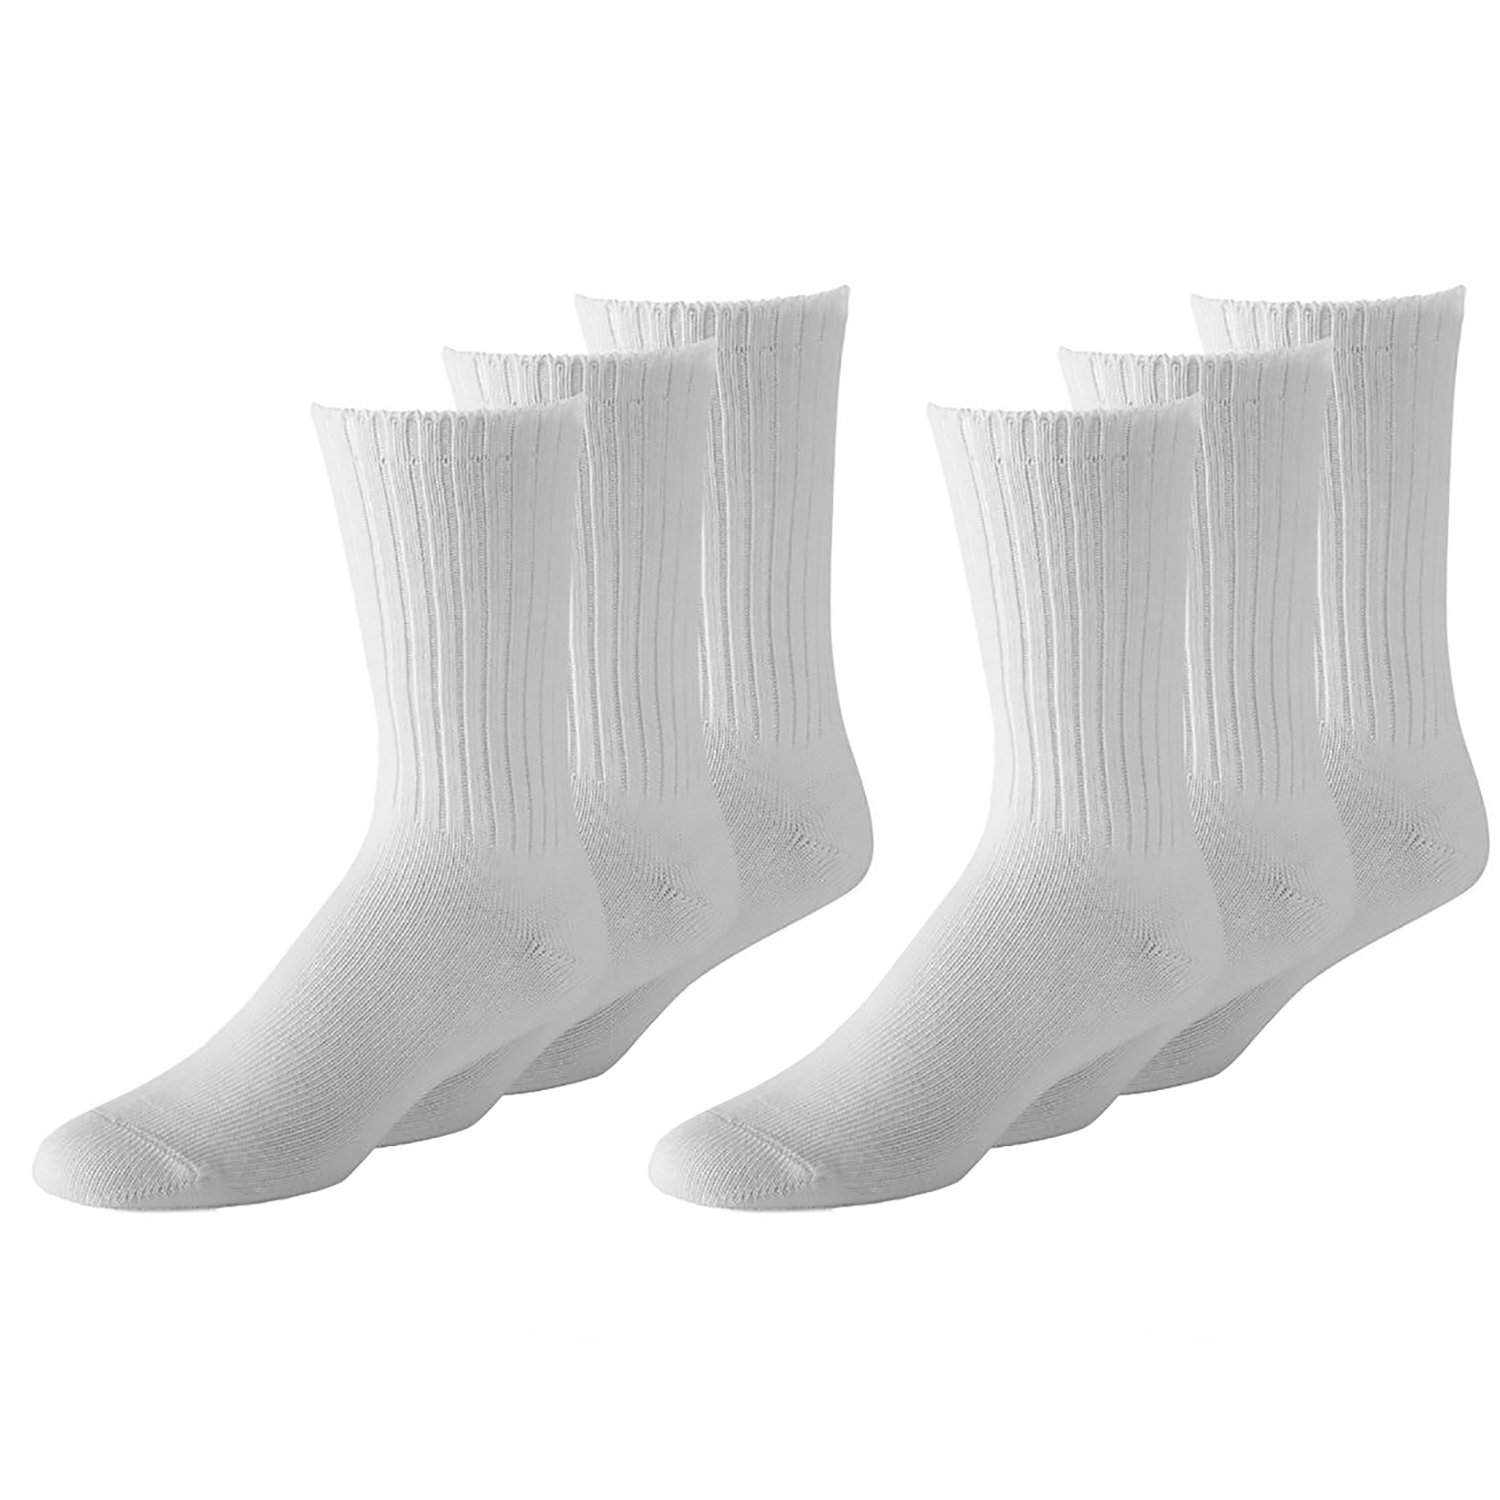 Daily Basic Unisex Crew Athletic Sports Cotton Socks  12 Pack